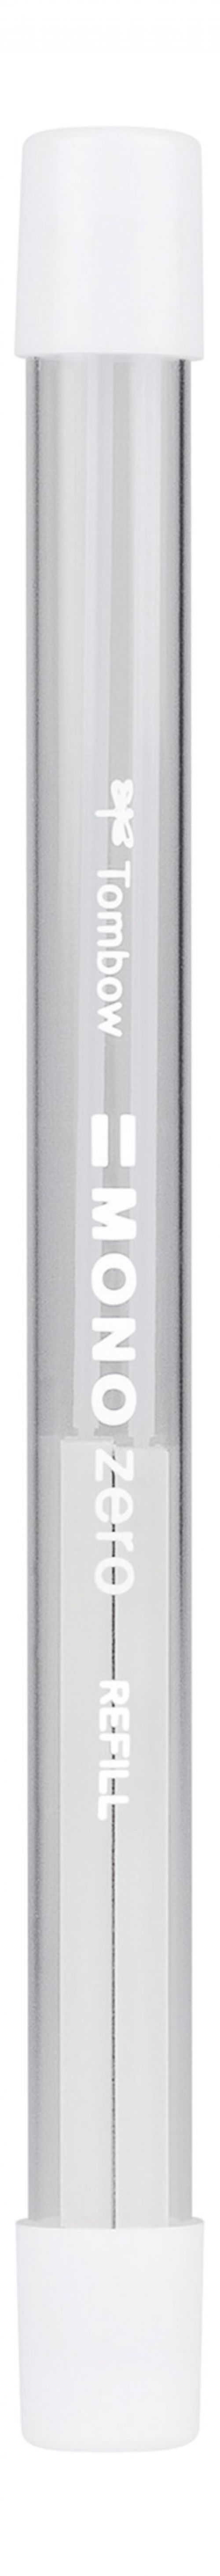 Tombow Eraser MONO Zero Rectangular Tip Refill